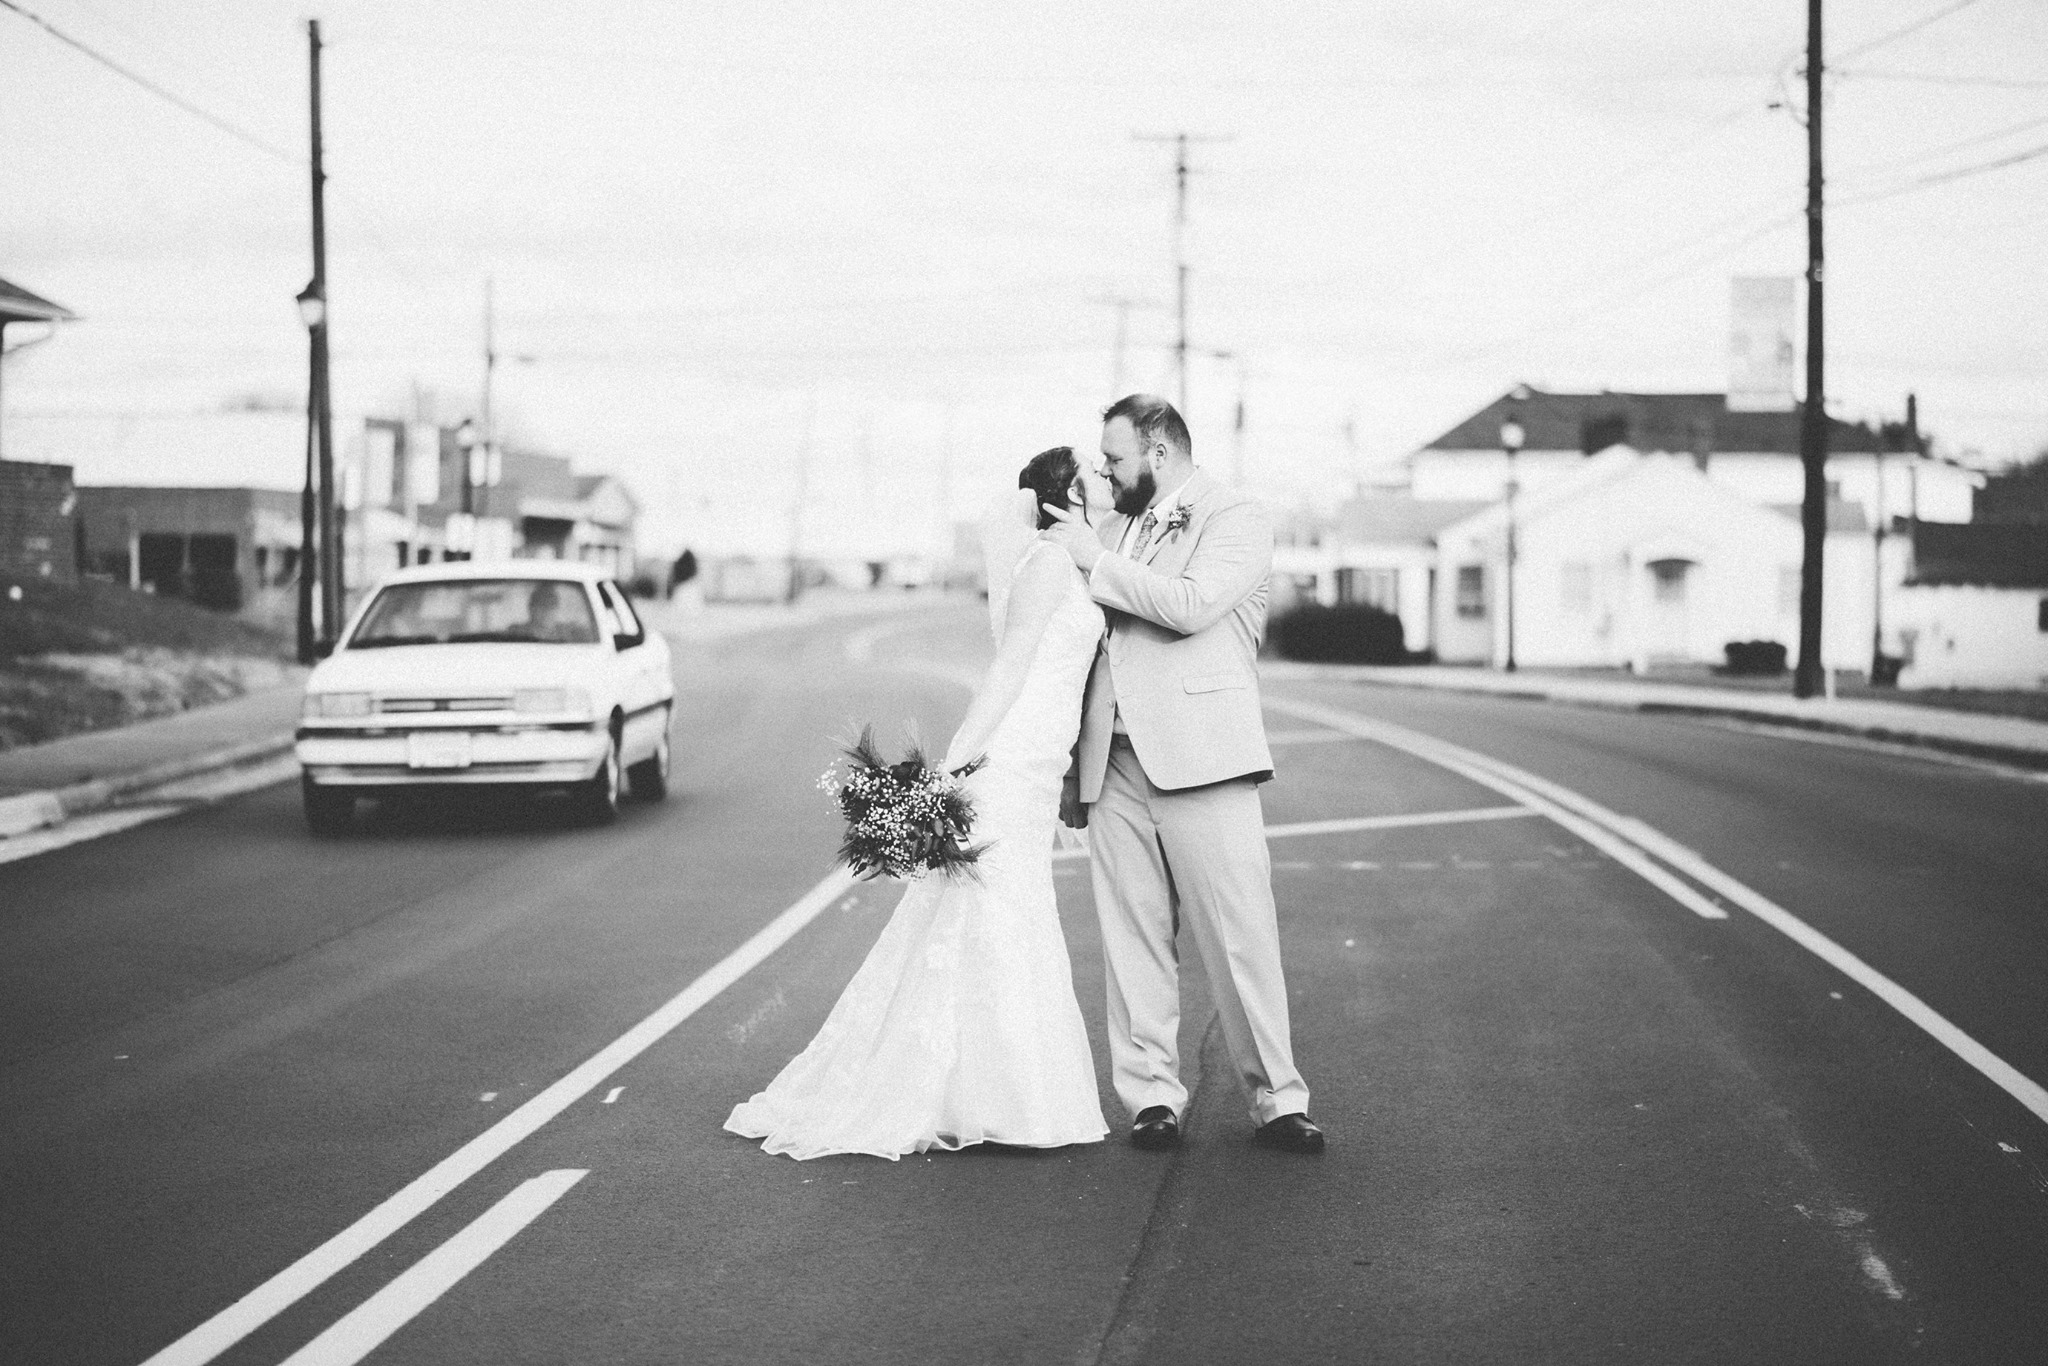 Wedding photography ideas by popular New York Wedding Photographer Laurel Creative